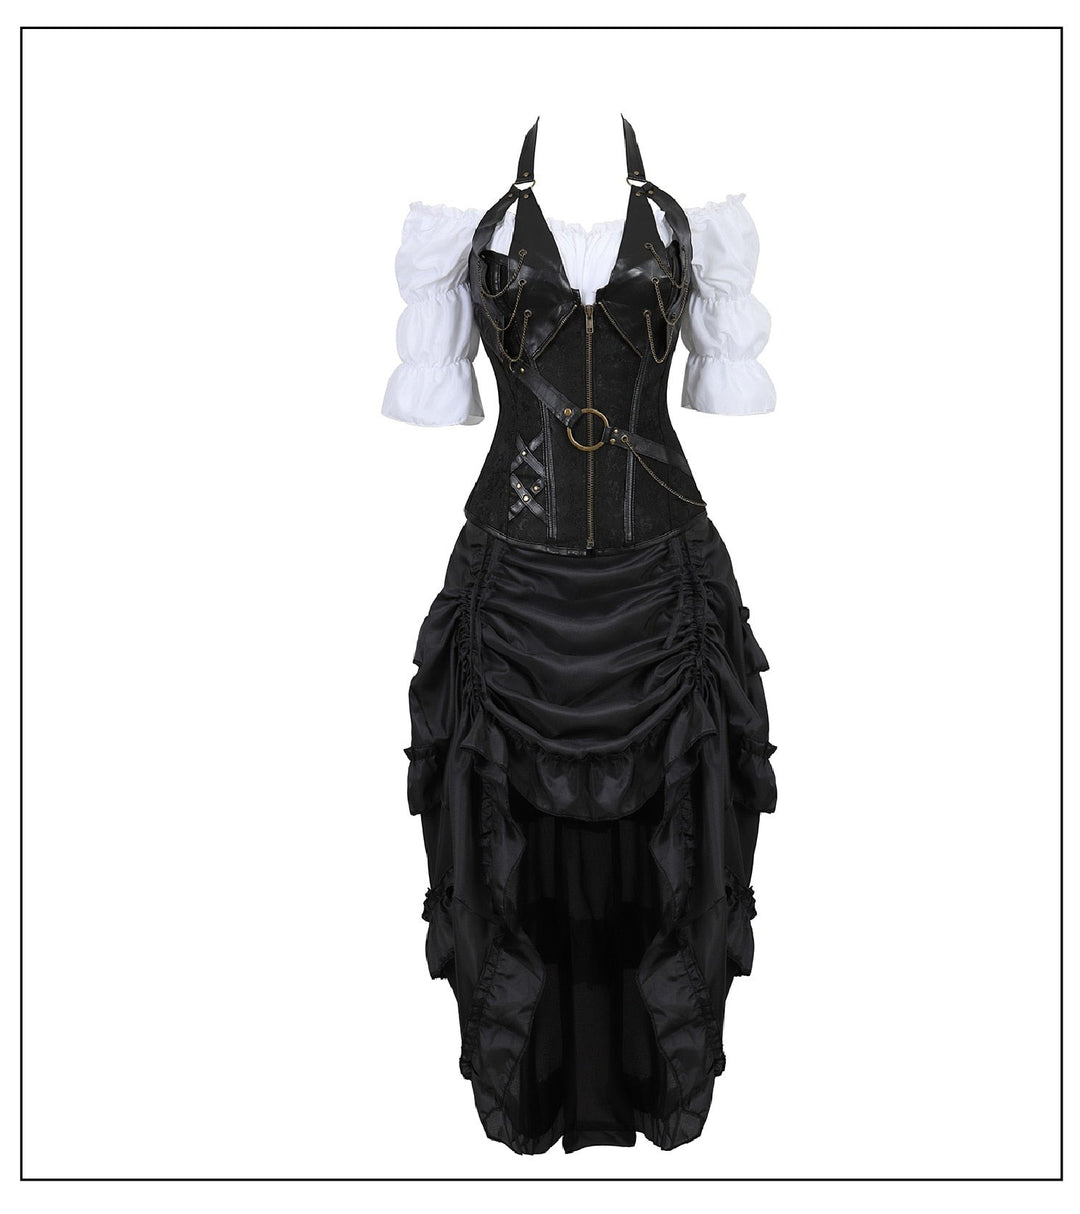 Victorian Steampunk Gothic Black and White Corset Dress Punk